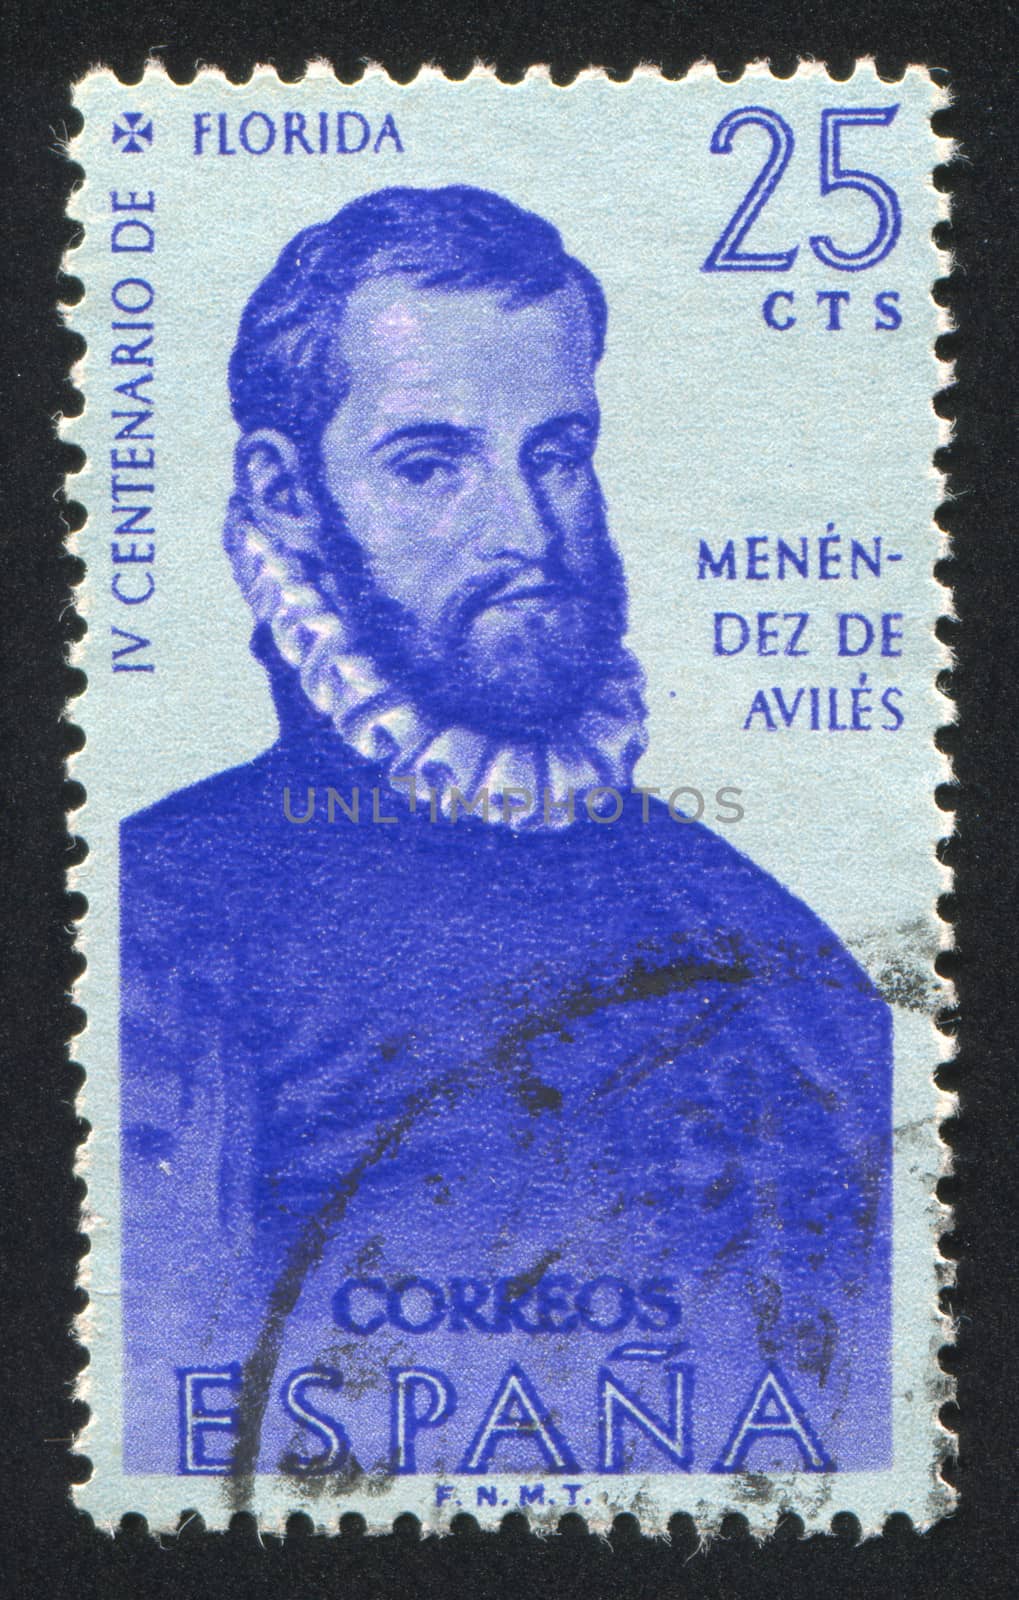 SPAIN - CIRCA 1960: stamp printed by Spain, shows Portrait of Pedro Menendez de Aviles, circa 1960